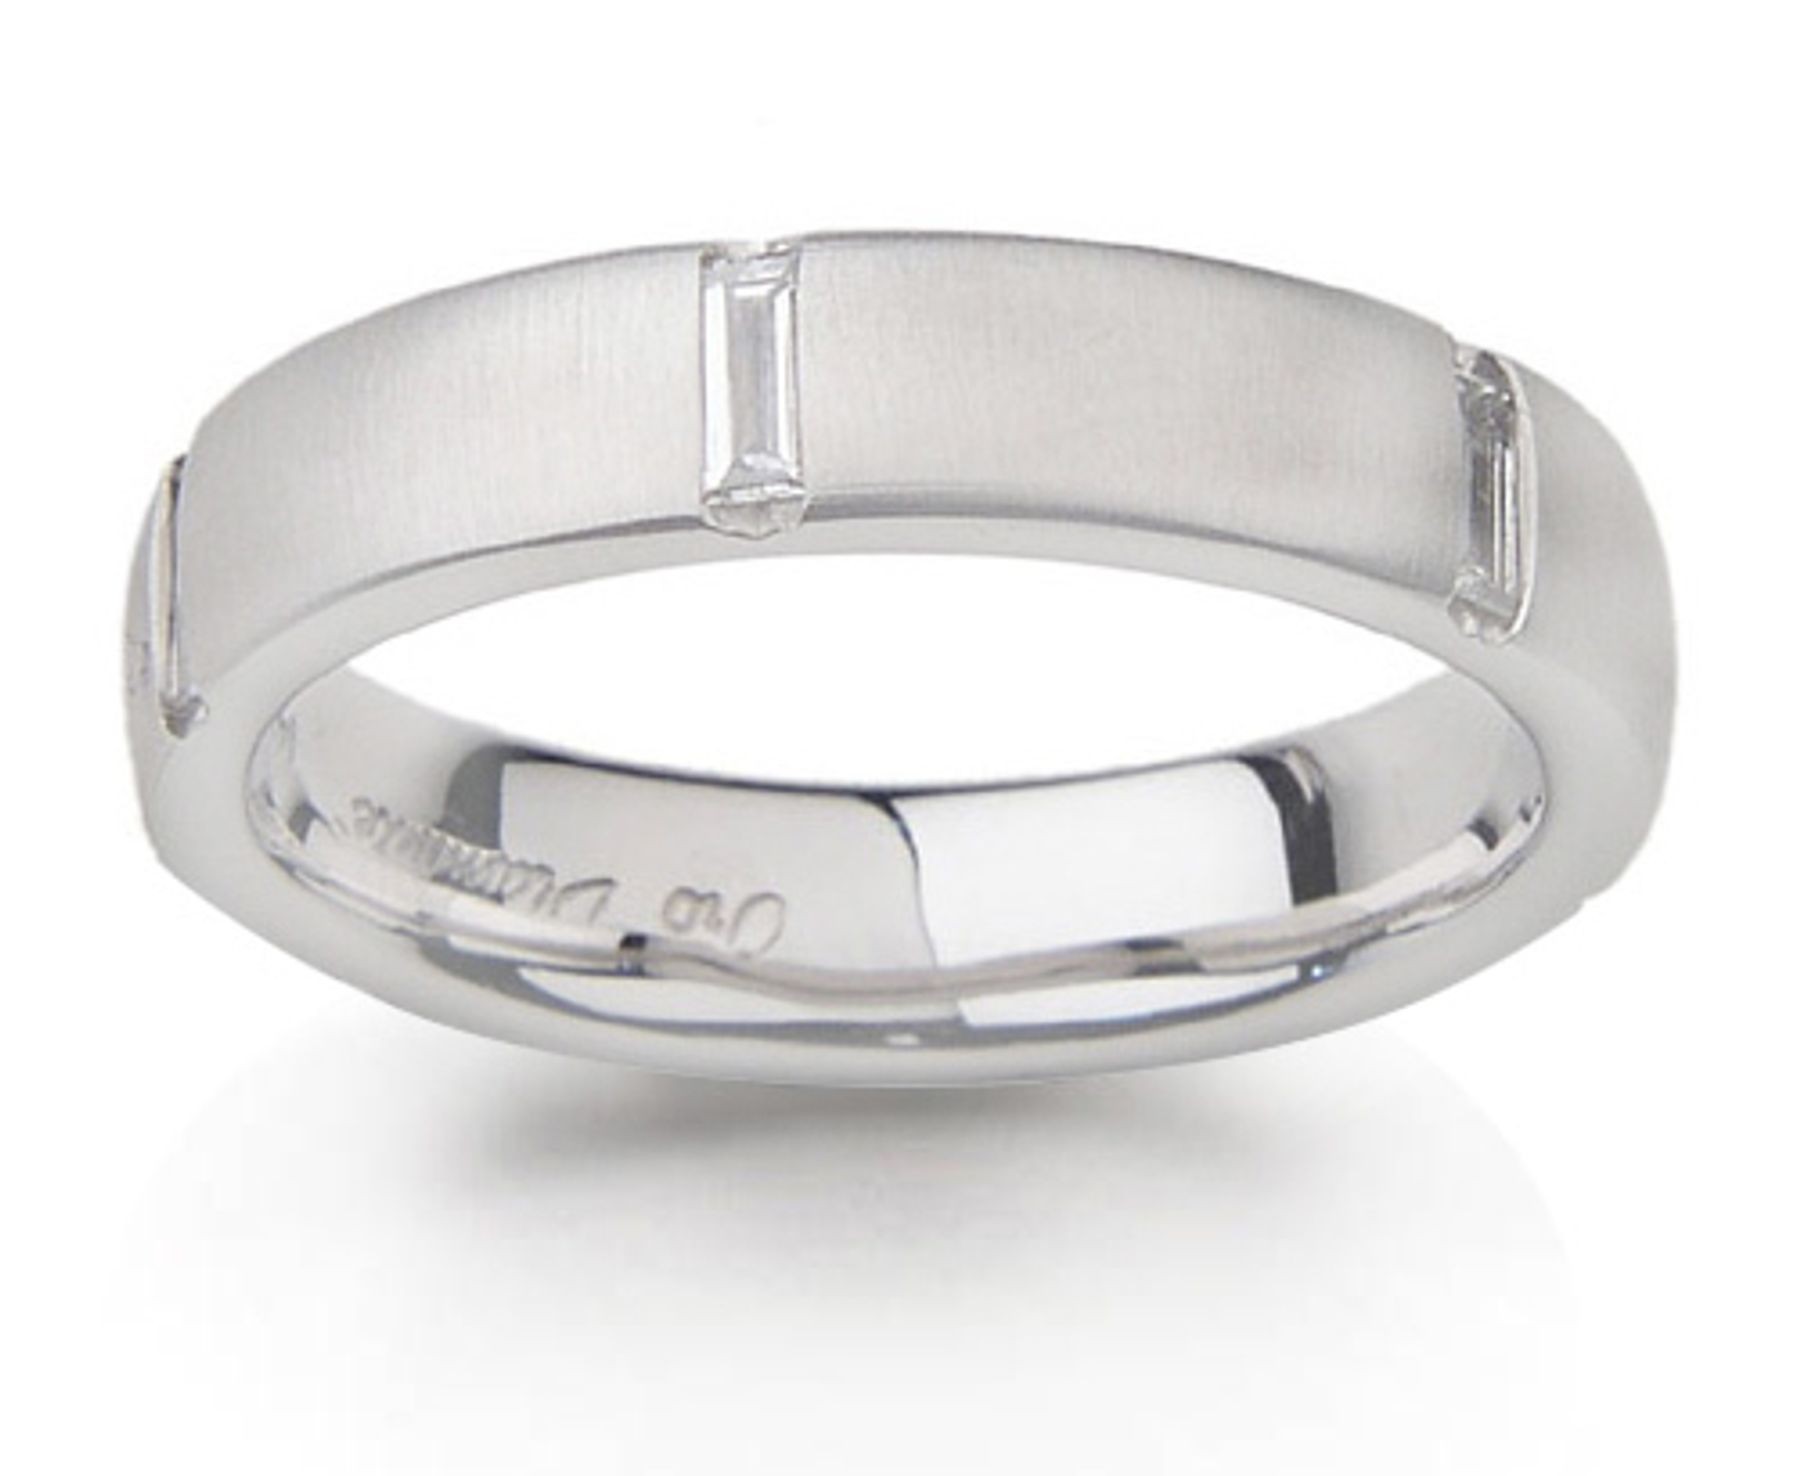 Platinum Comfort Fit Diamond Ring with Baguette Diamonds